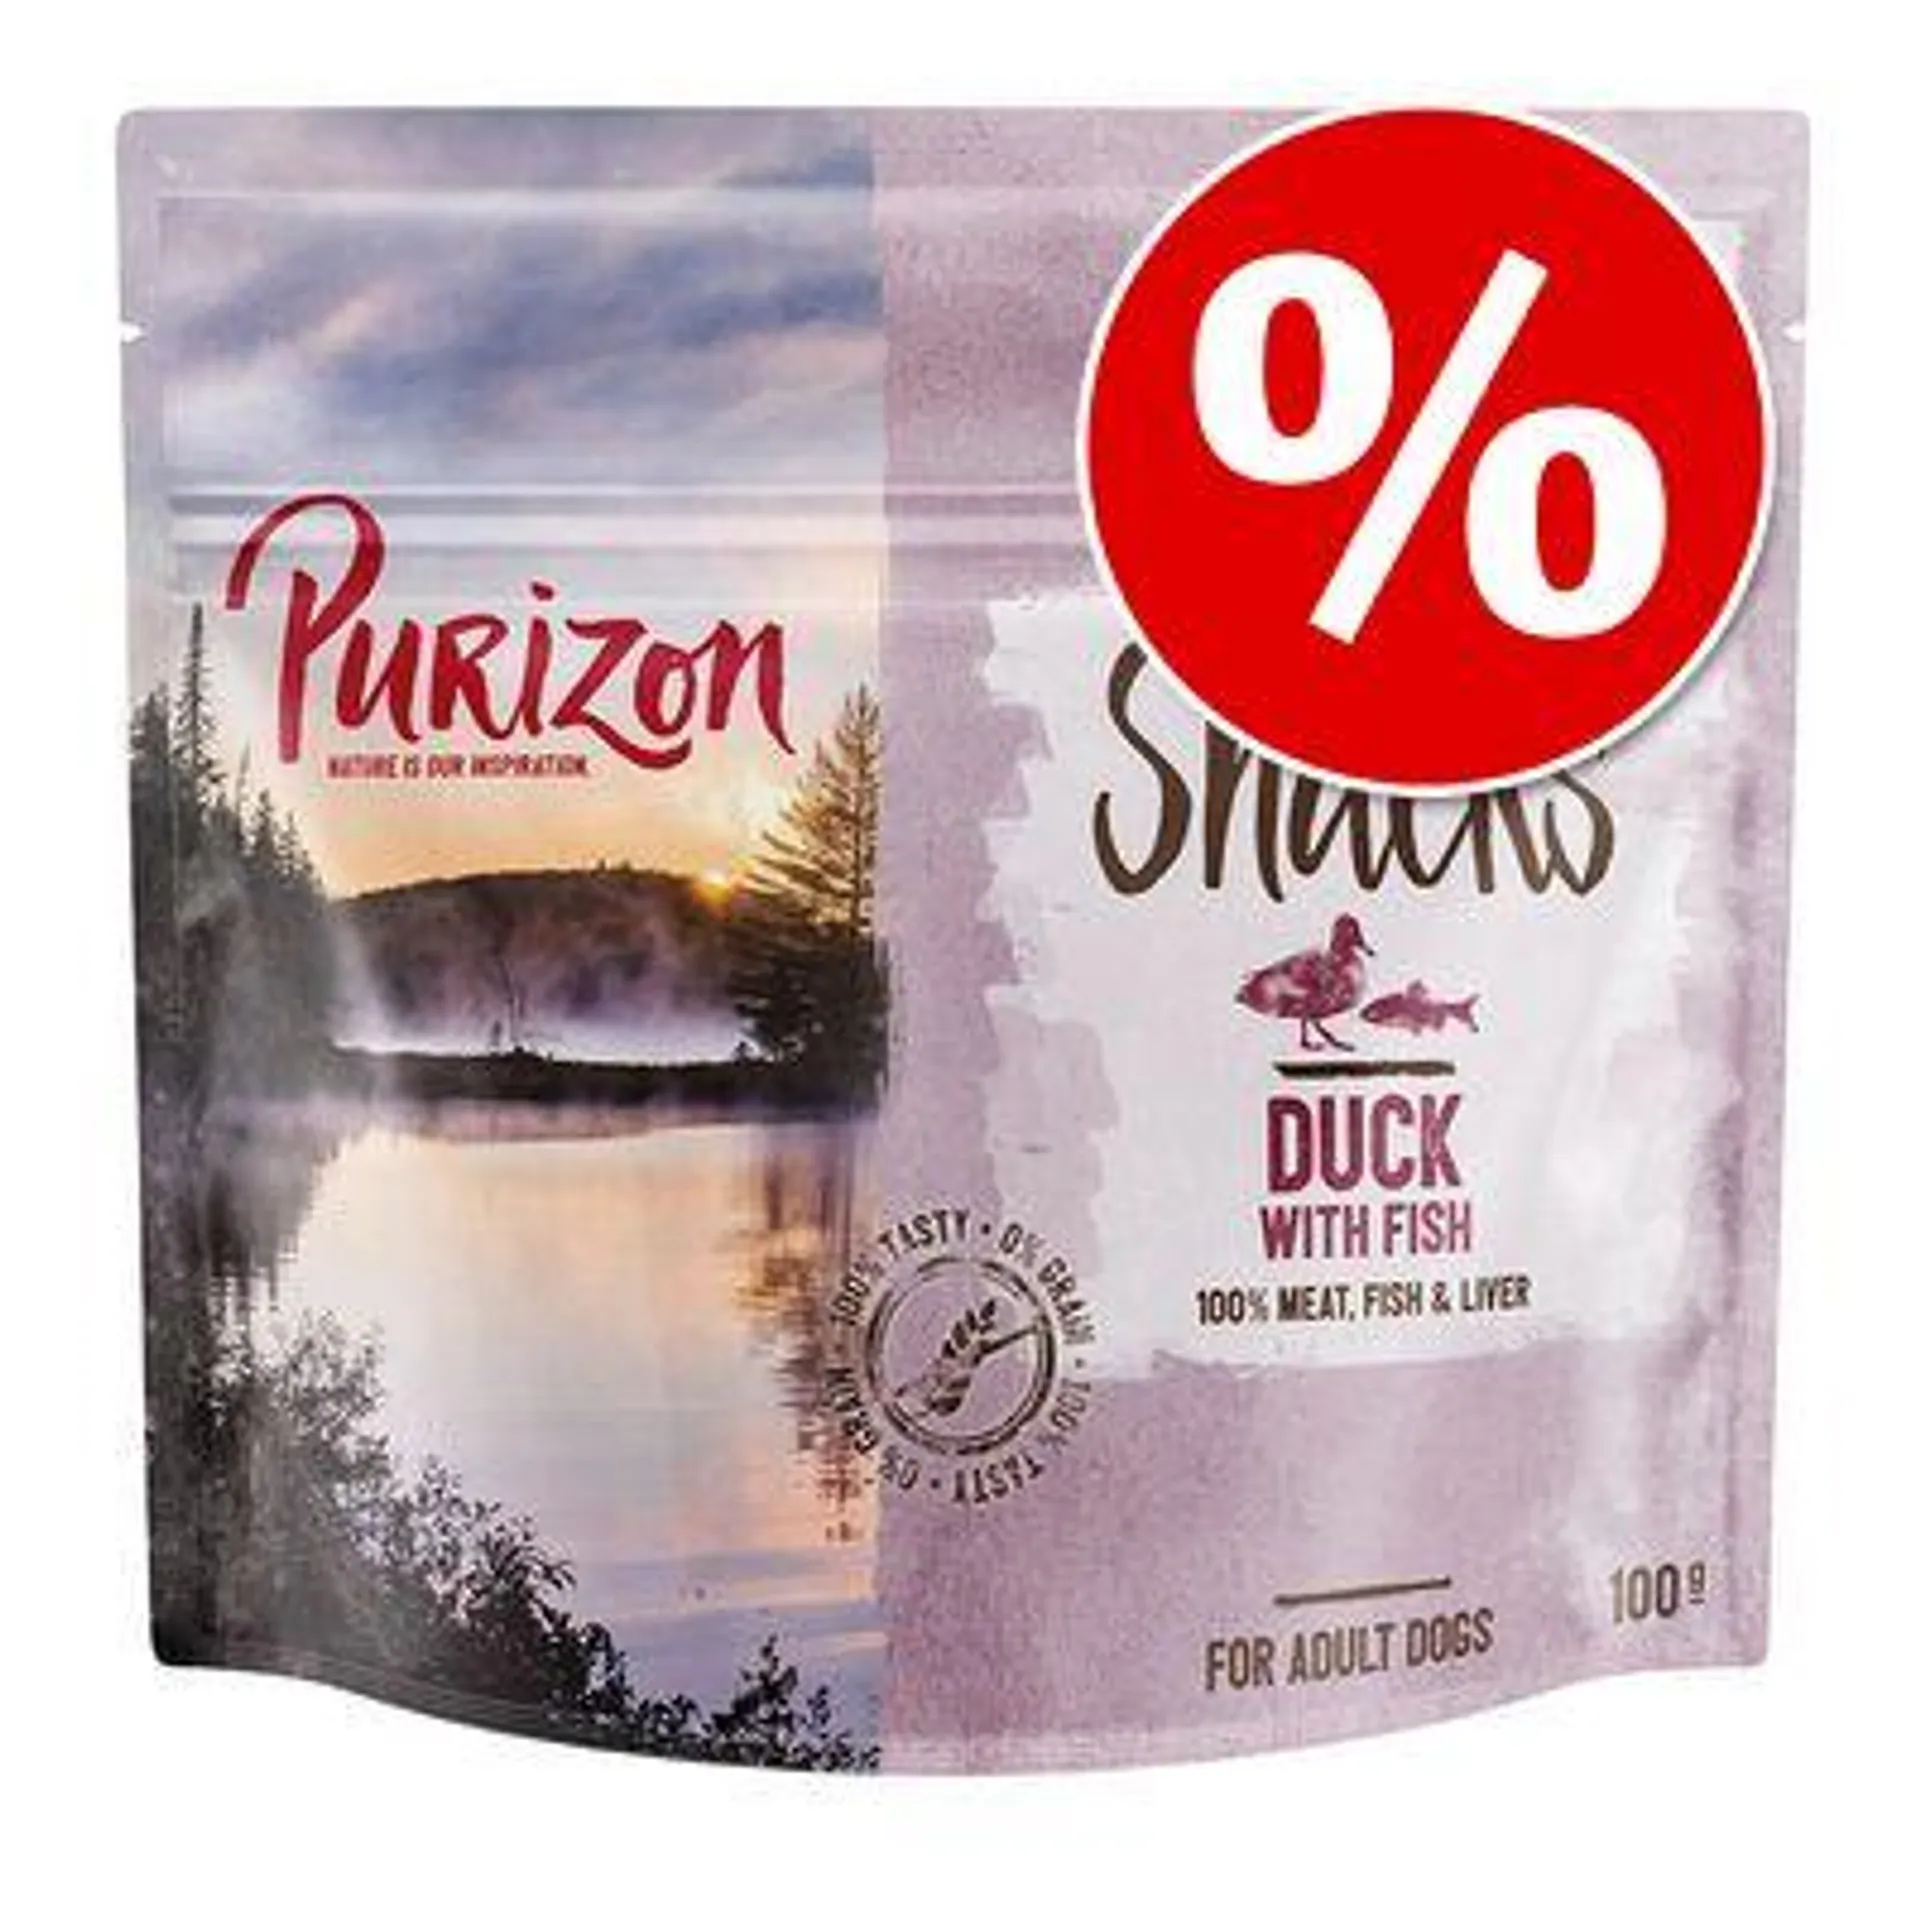 100g Purizon Duck & Fish Dog Snacks - Special Price!*